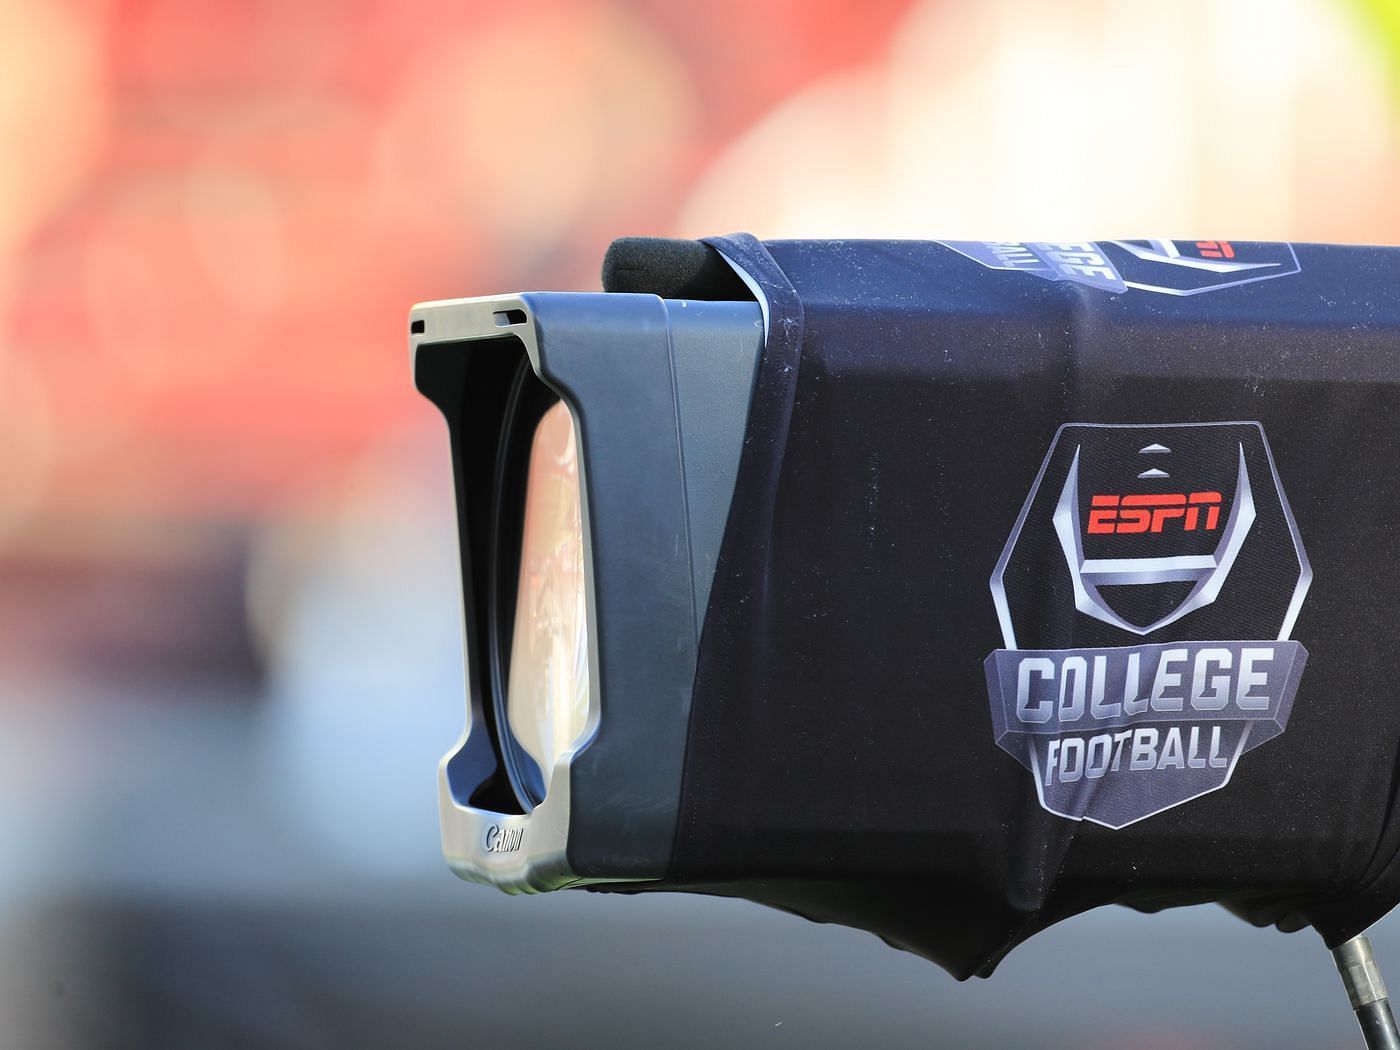 ESPN cameras covering college football